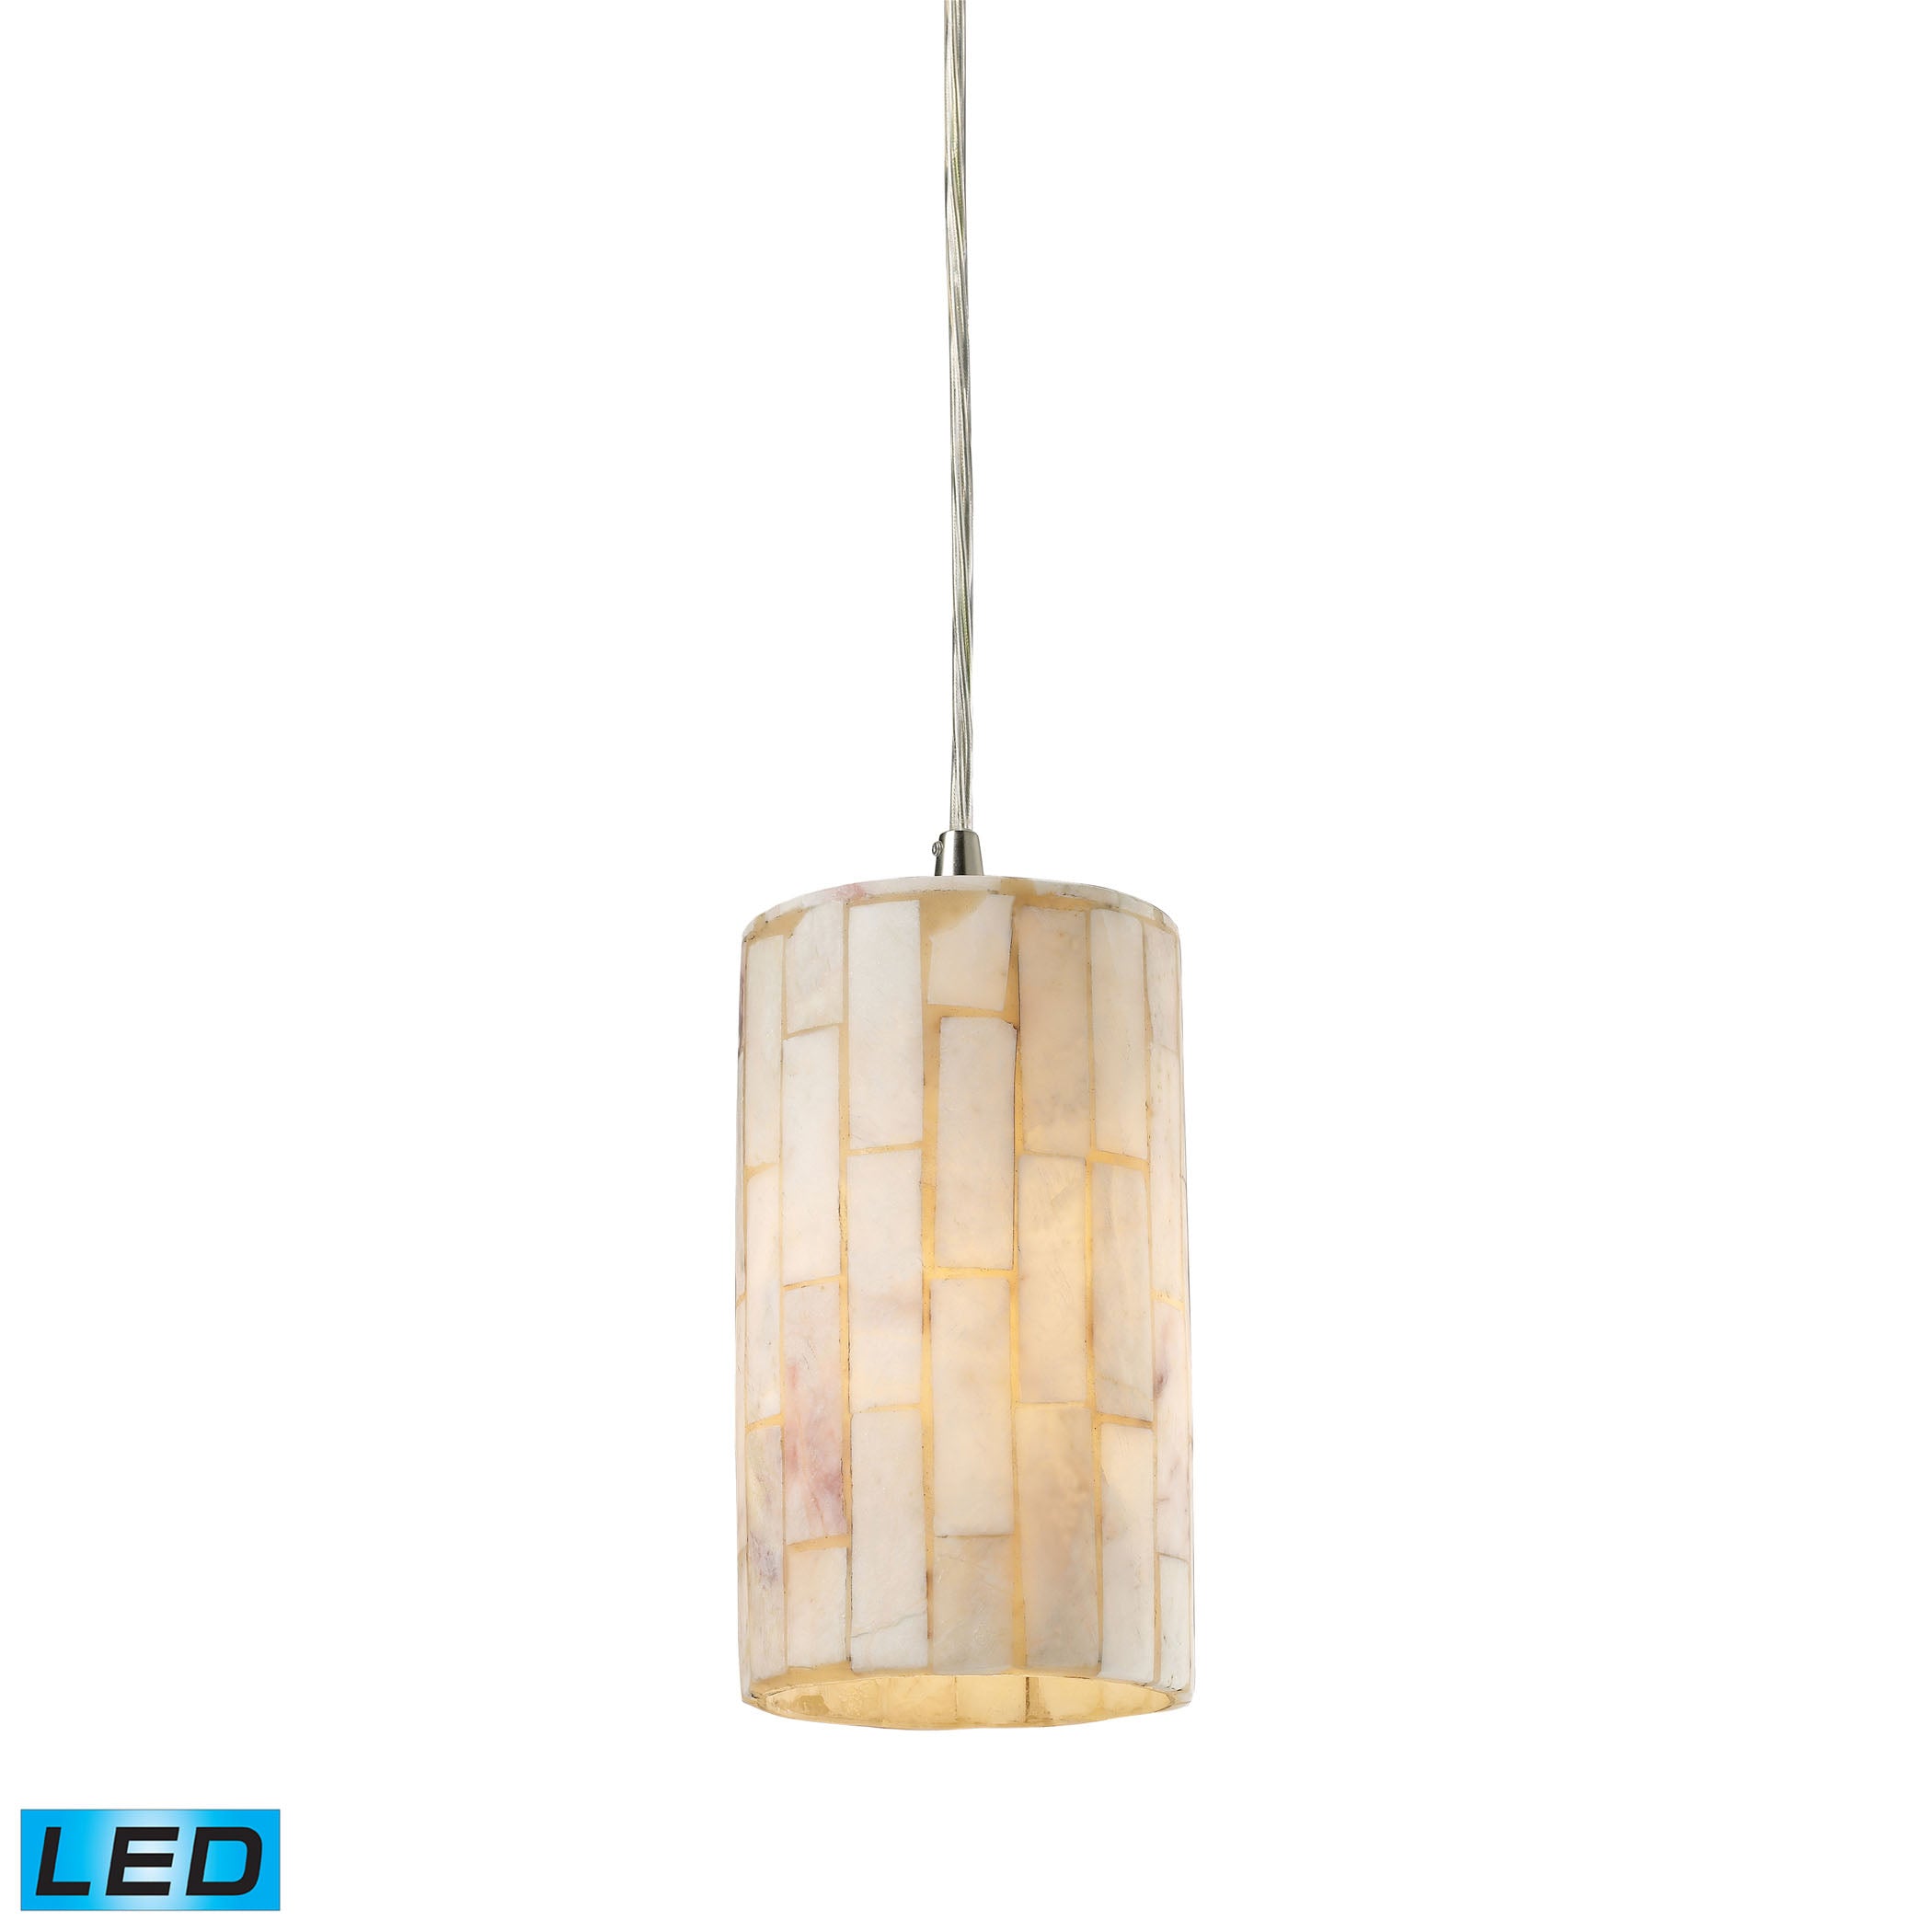 ELK Lighting 10147/1-LED Coletta 1-Light Mini Pendant in Satin Nickel with Genuine Stone Shade - Includes LED Bulb